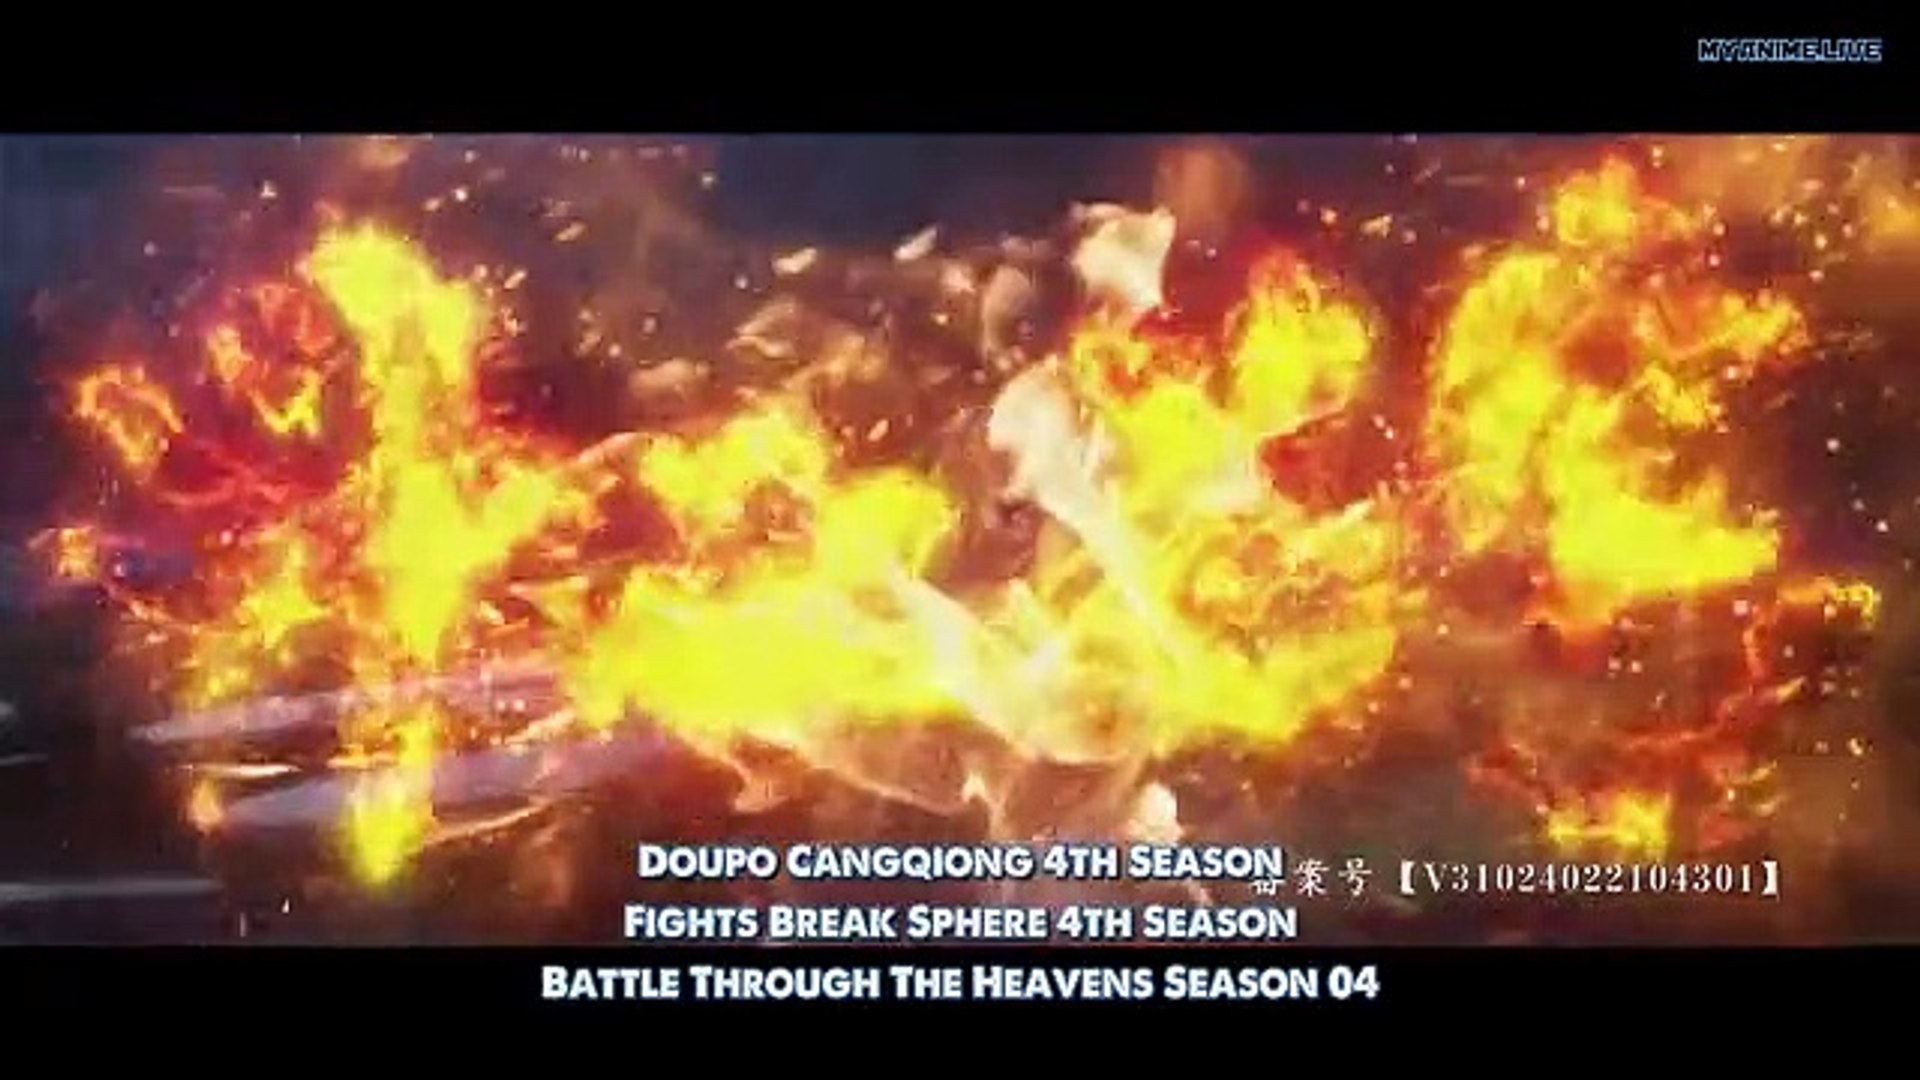 Doupo Cangqiong 4th Season (Fights Break Sphere 4th Season) 